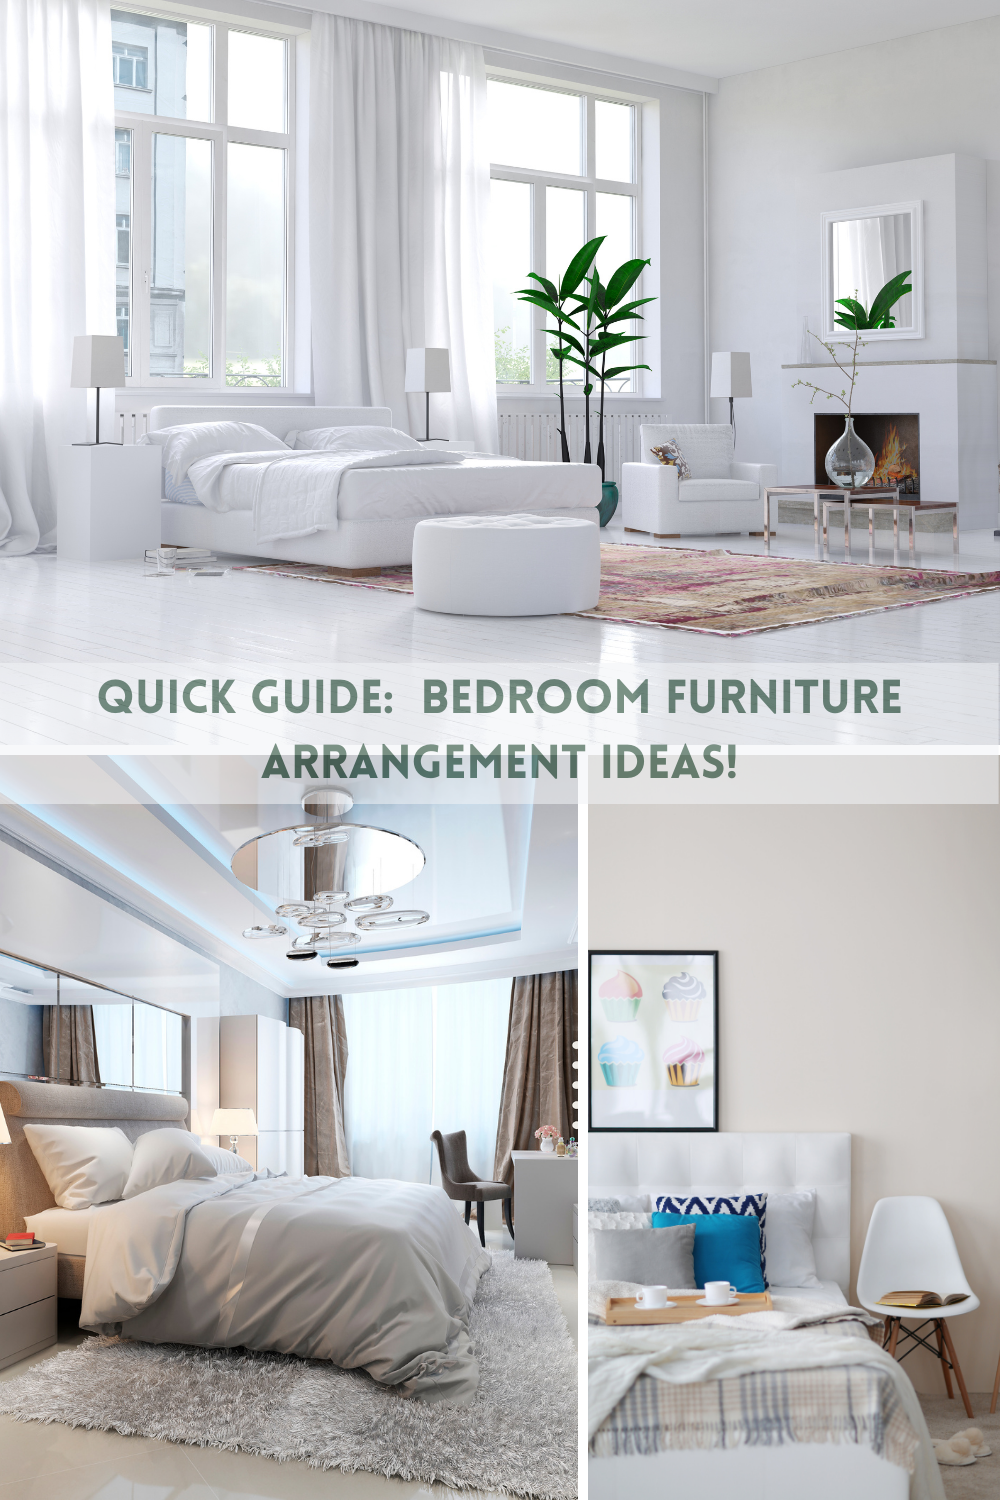 Quick Guide: Bedroom Furniture Arrangement Ideas!